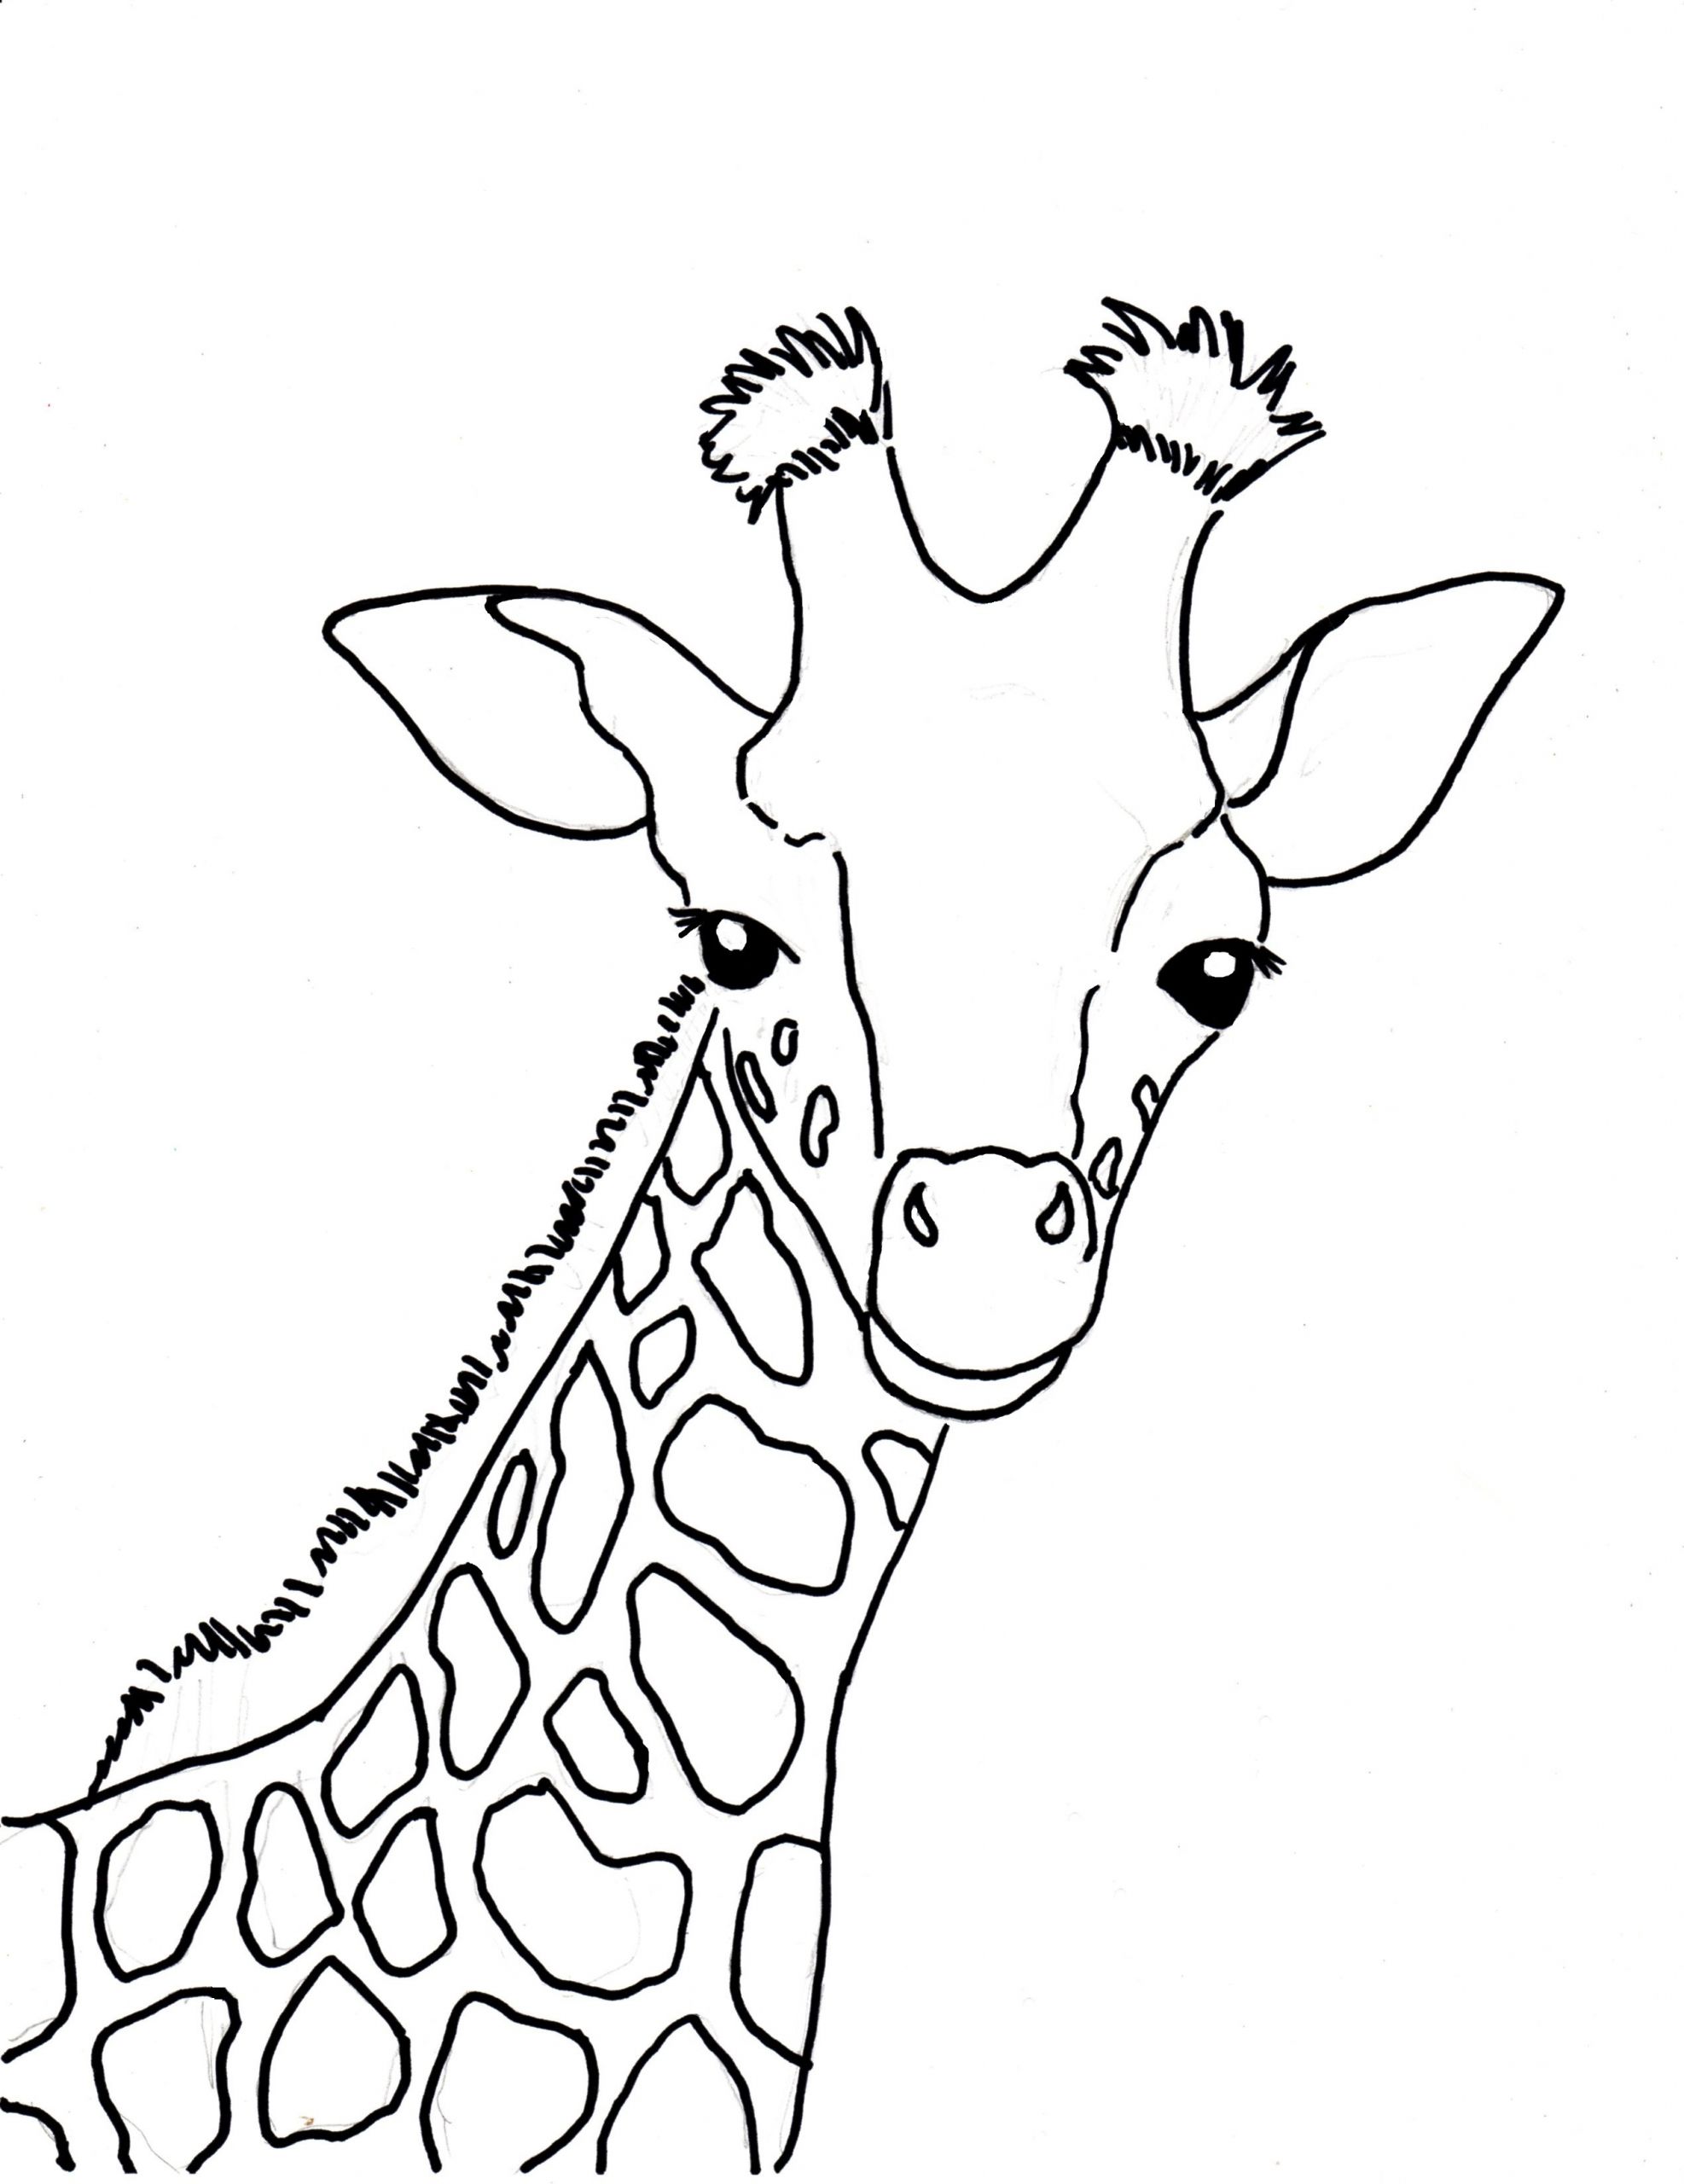 Baby Giraffe Coloring Page
 Baby Giraffe Coloring Page Samantha Bell